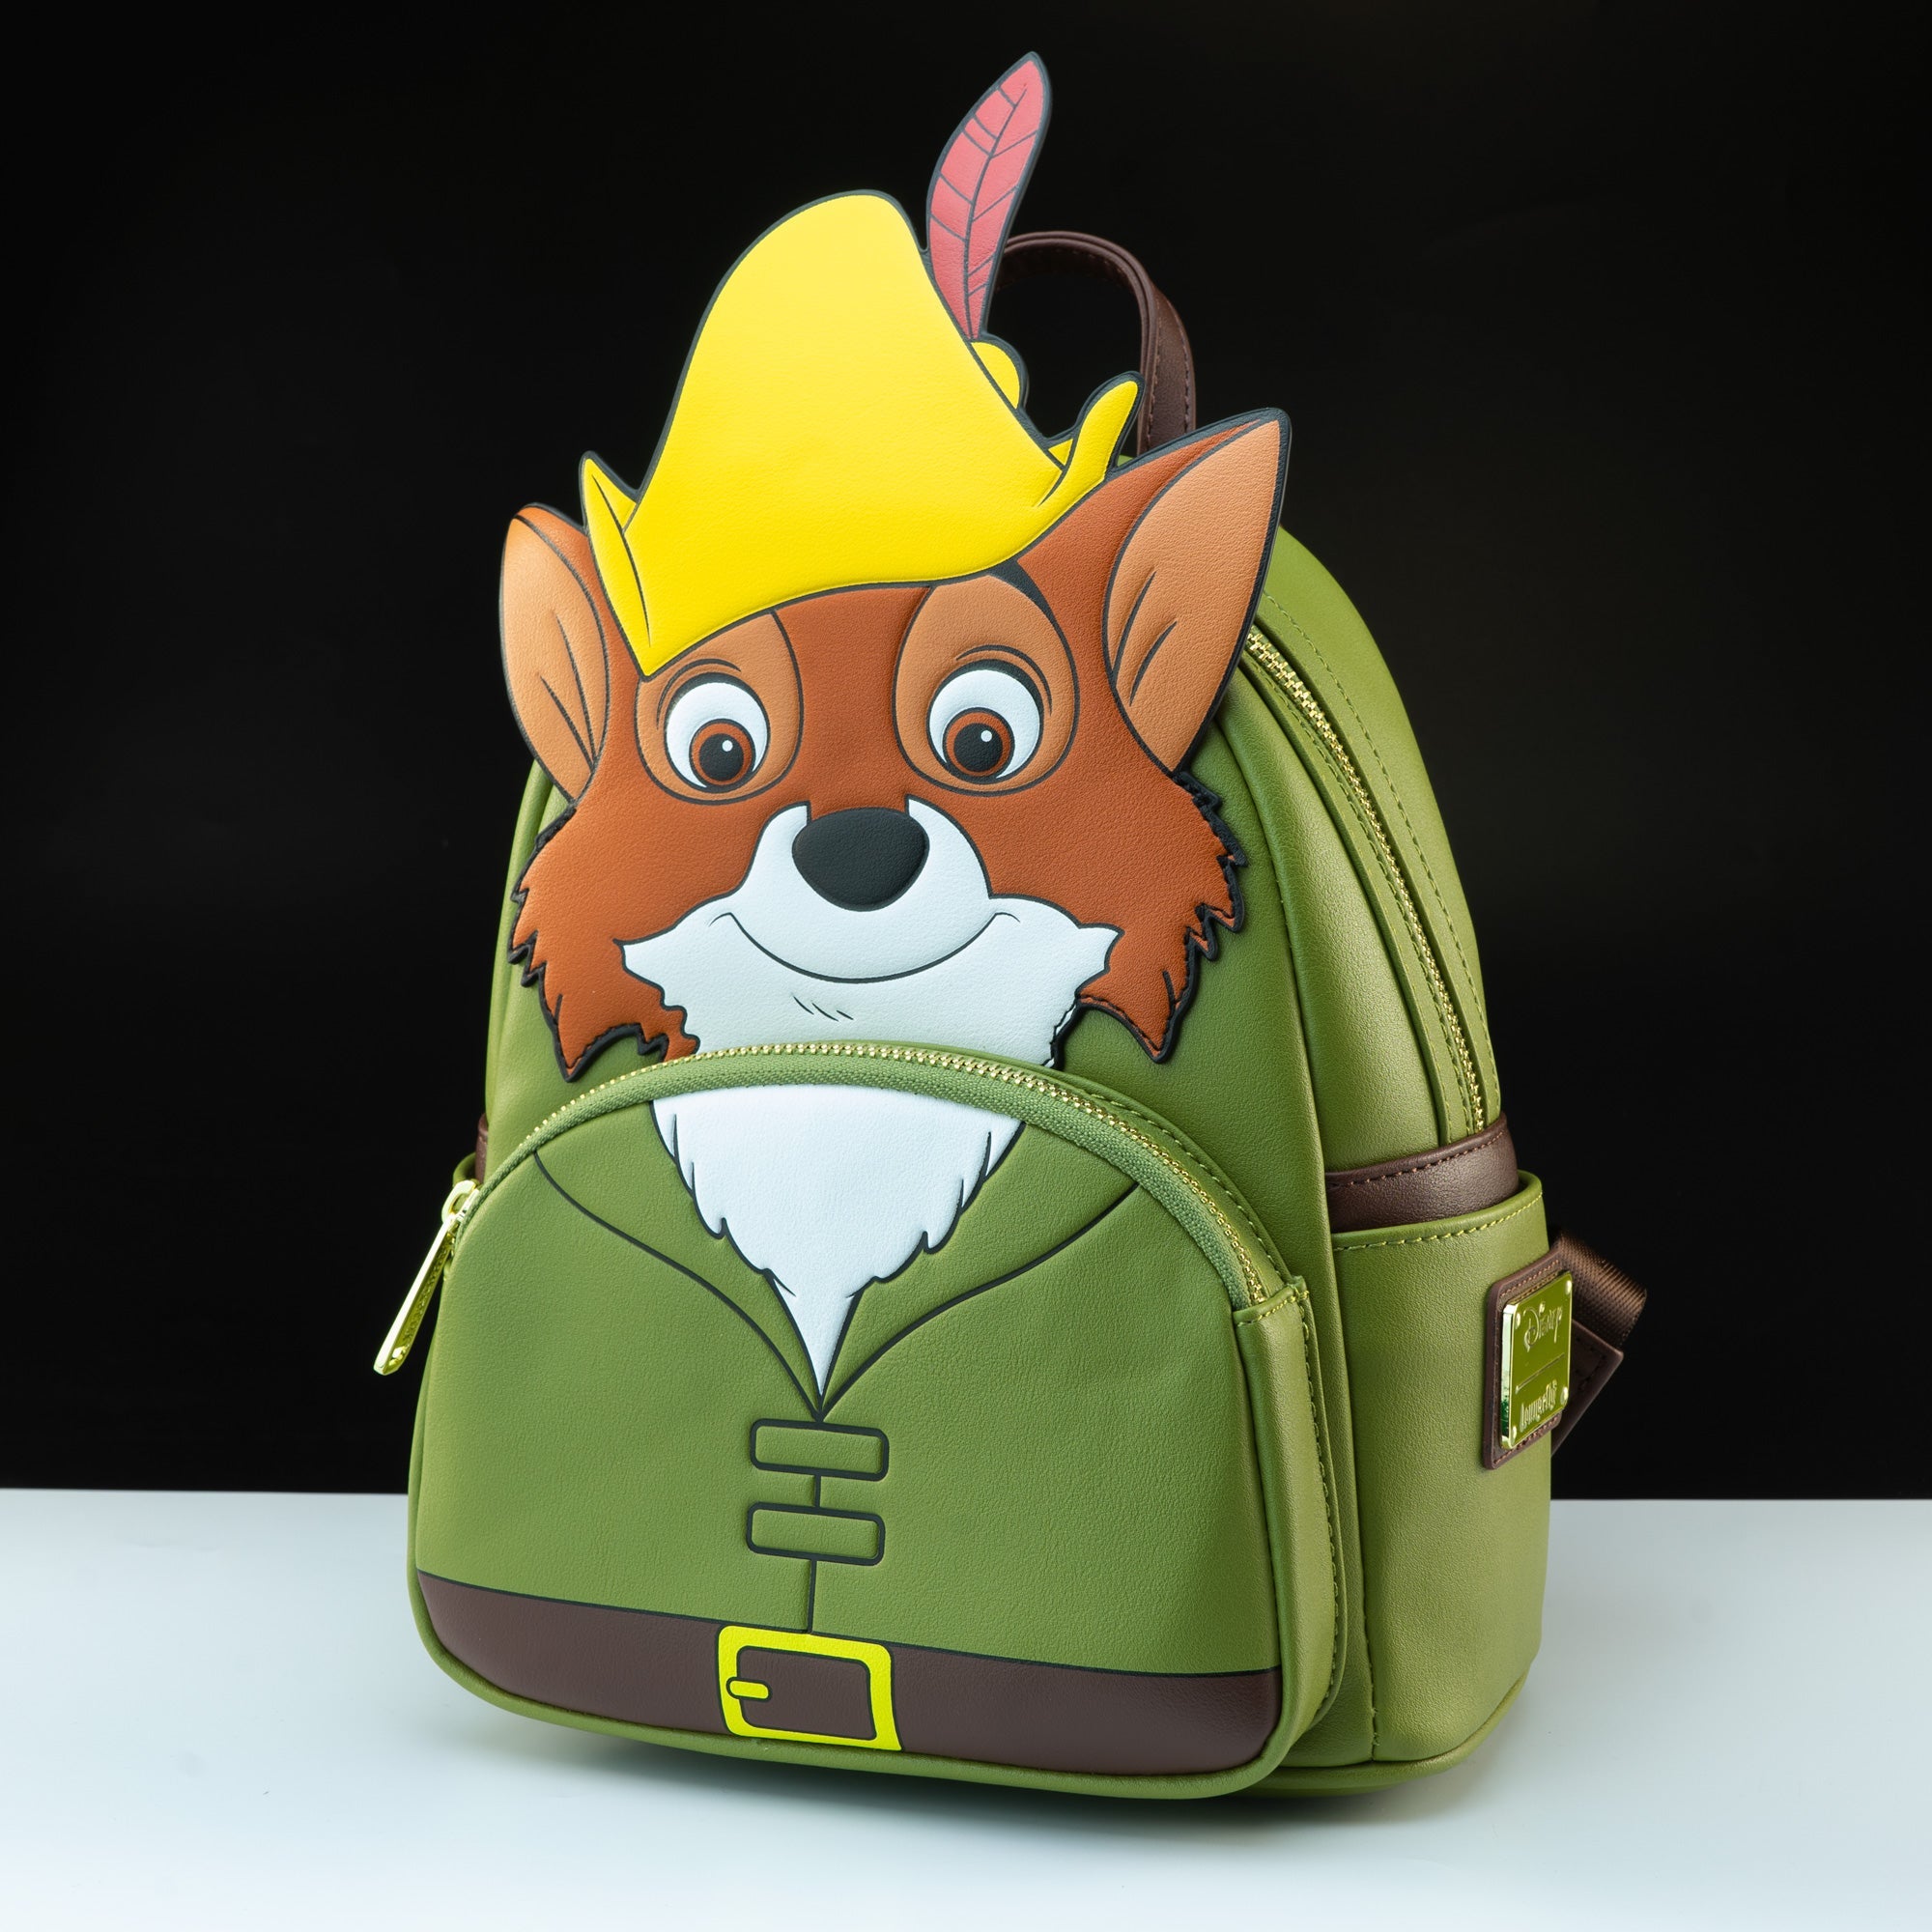 Loungefly x Disney Robin Hood Cosplay Mini Backpack - GeekCore